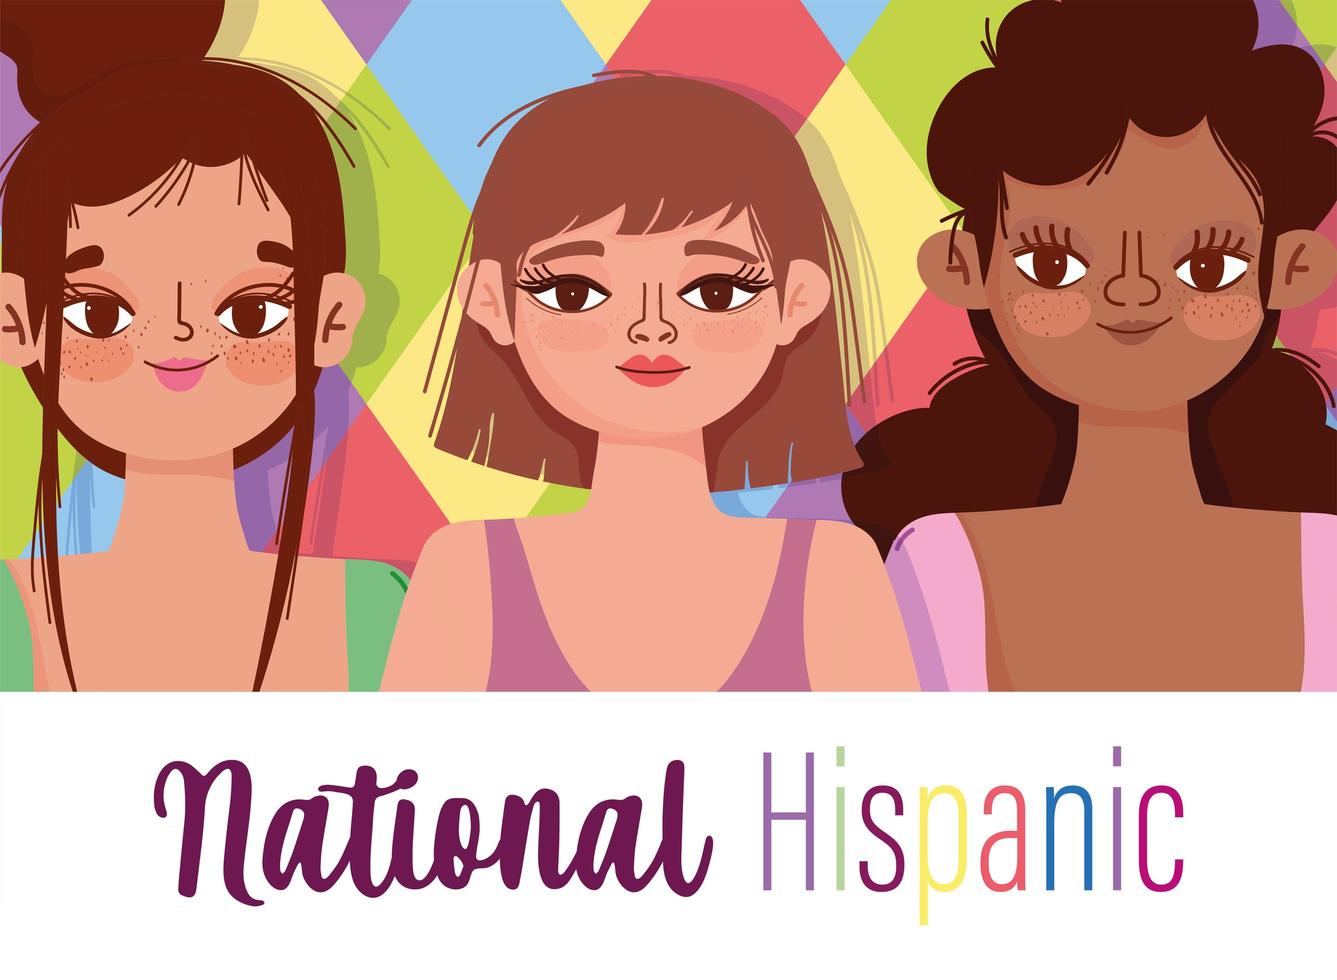 National Hispanic heritage month, happy young women cartoon vector